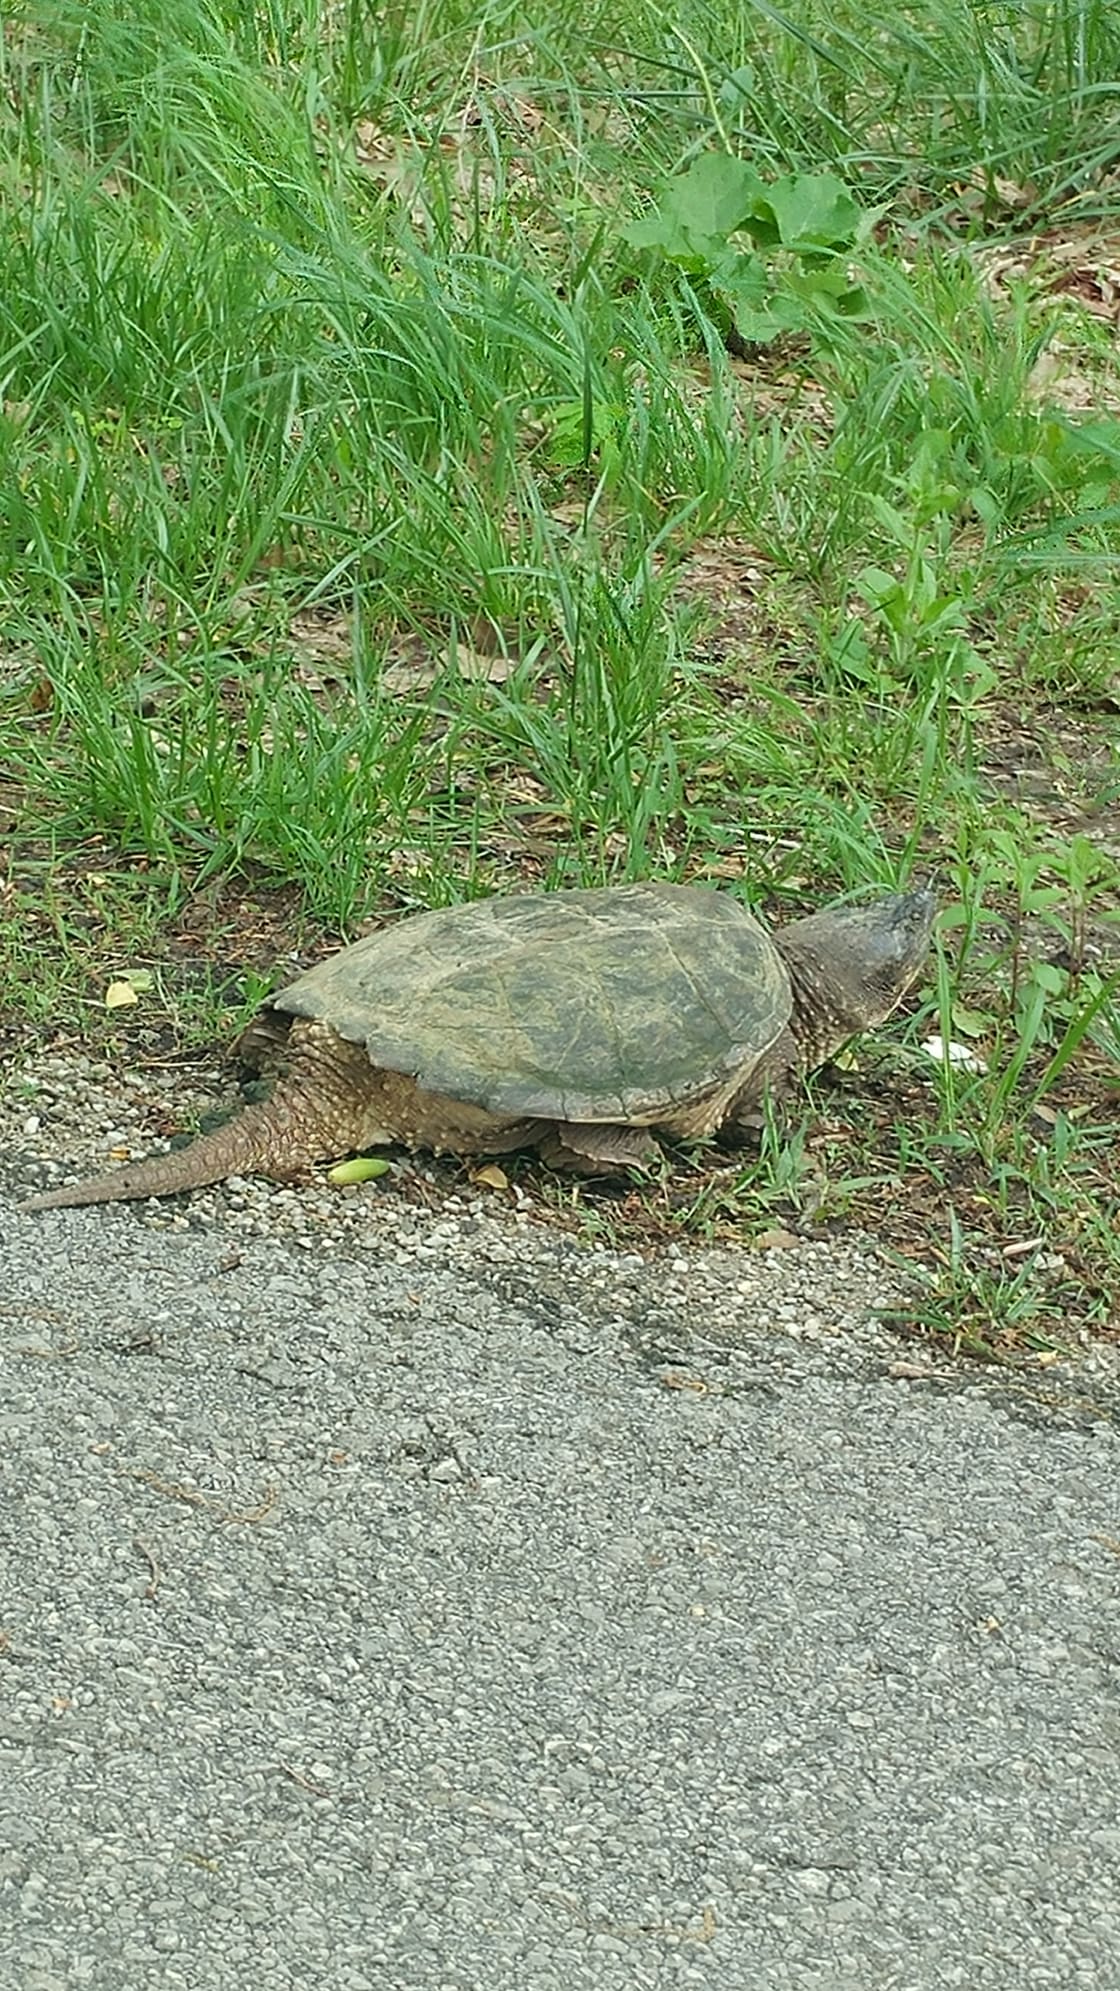 Turtles are plentiful on Blue River!